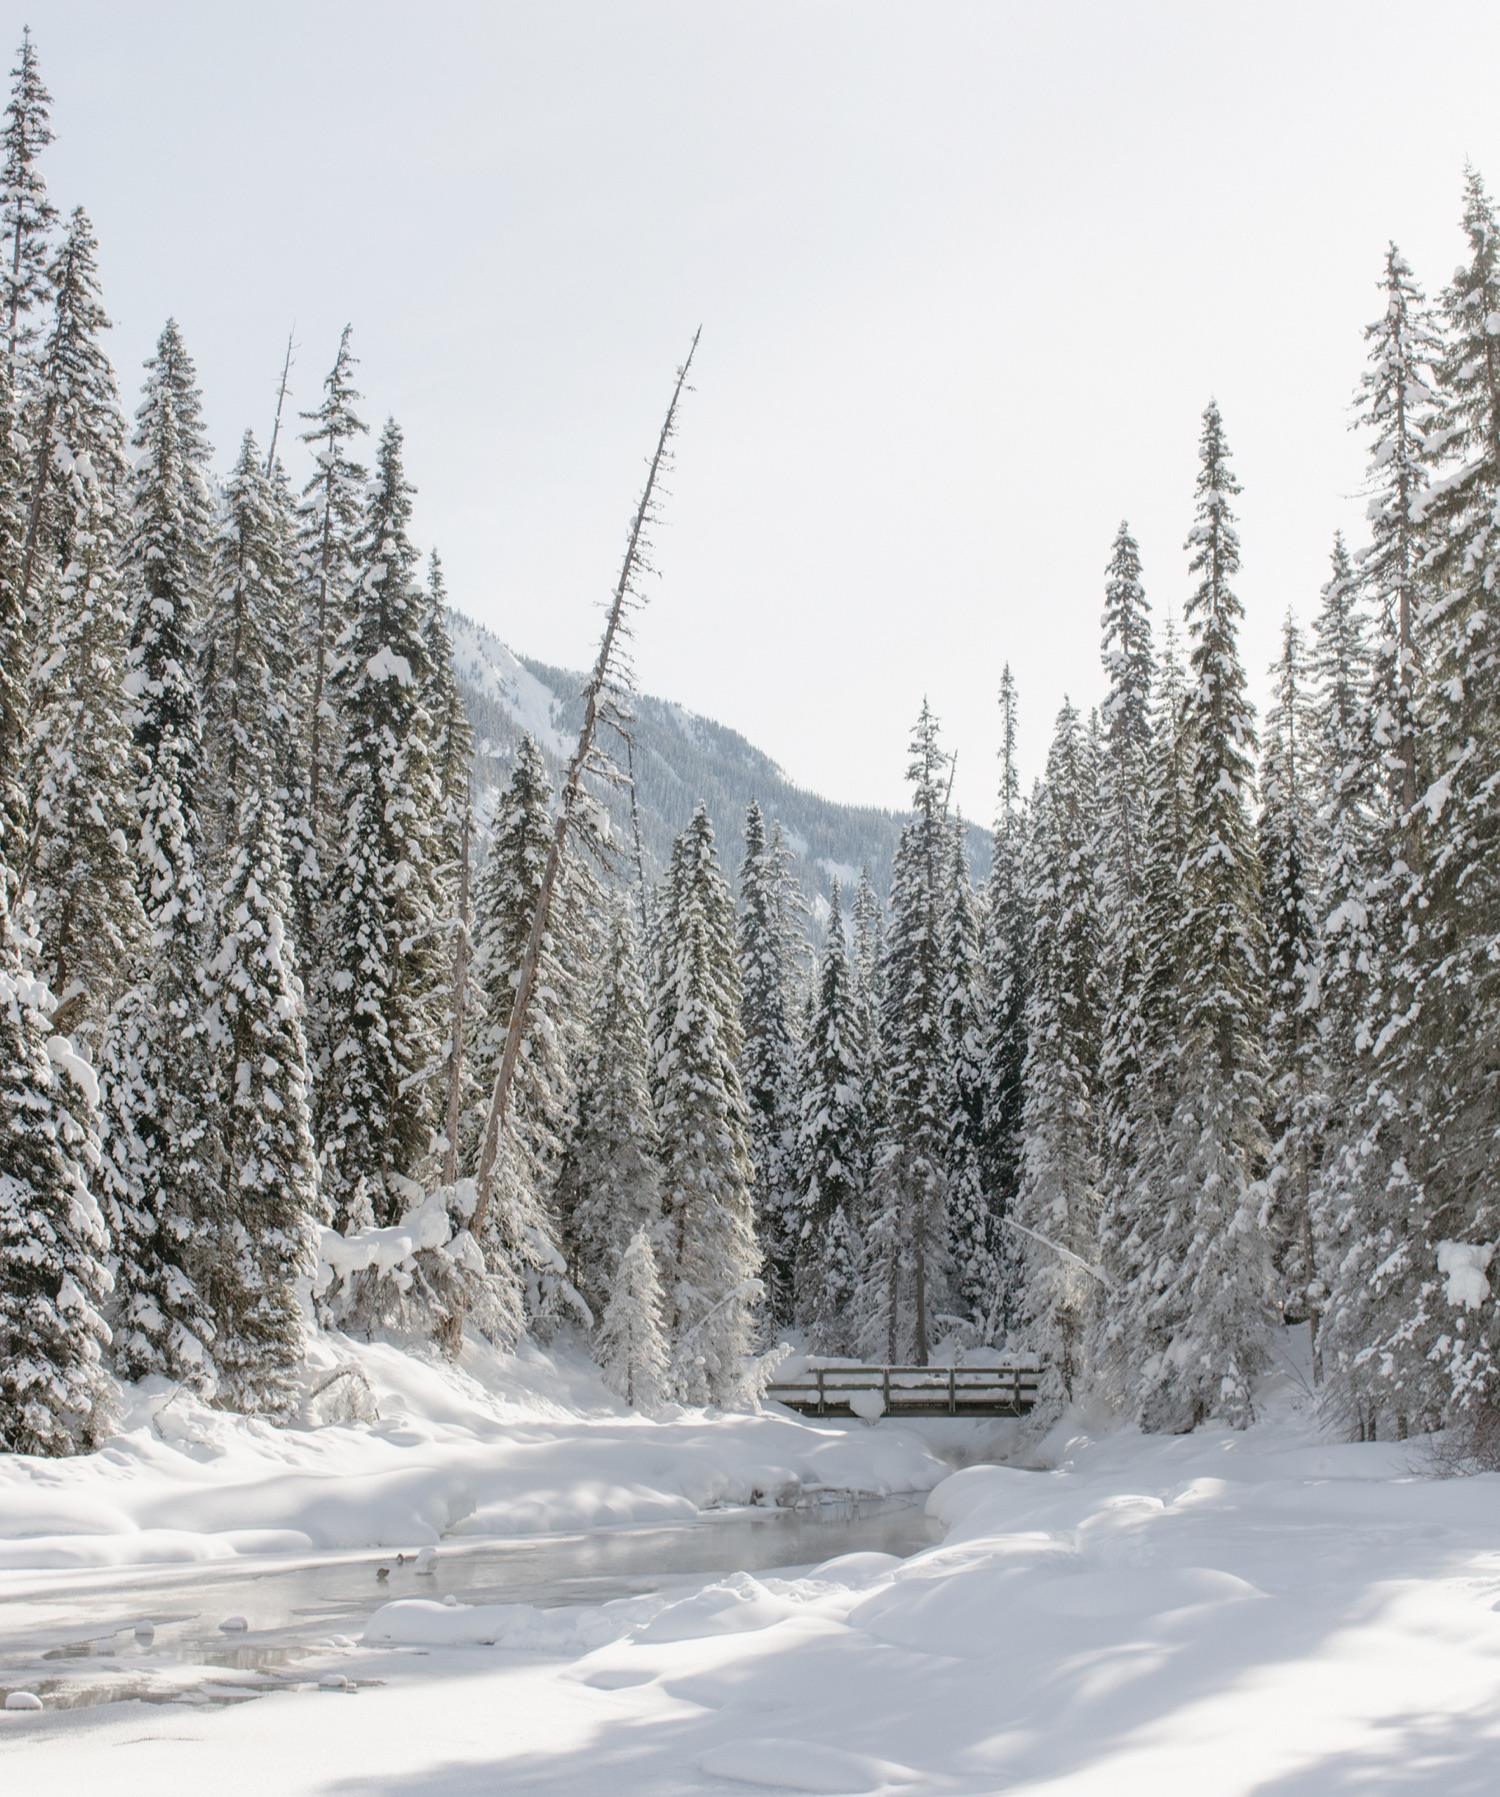 Bridge at Emerald Lake Lodge in winter